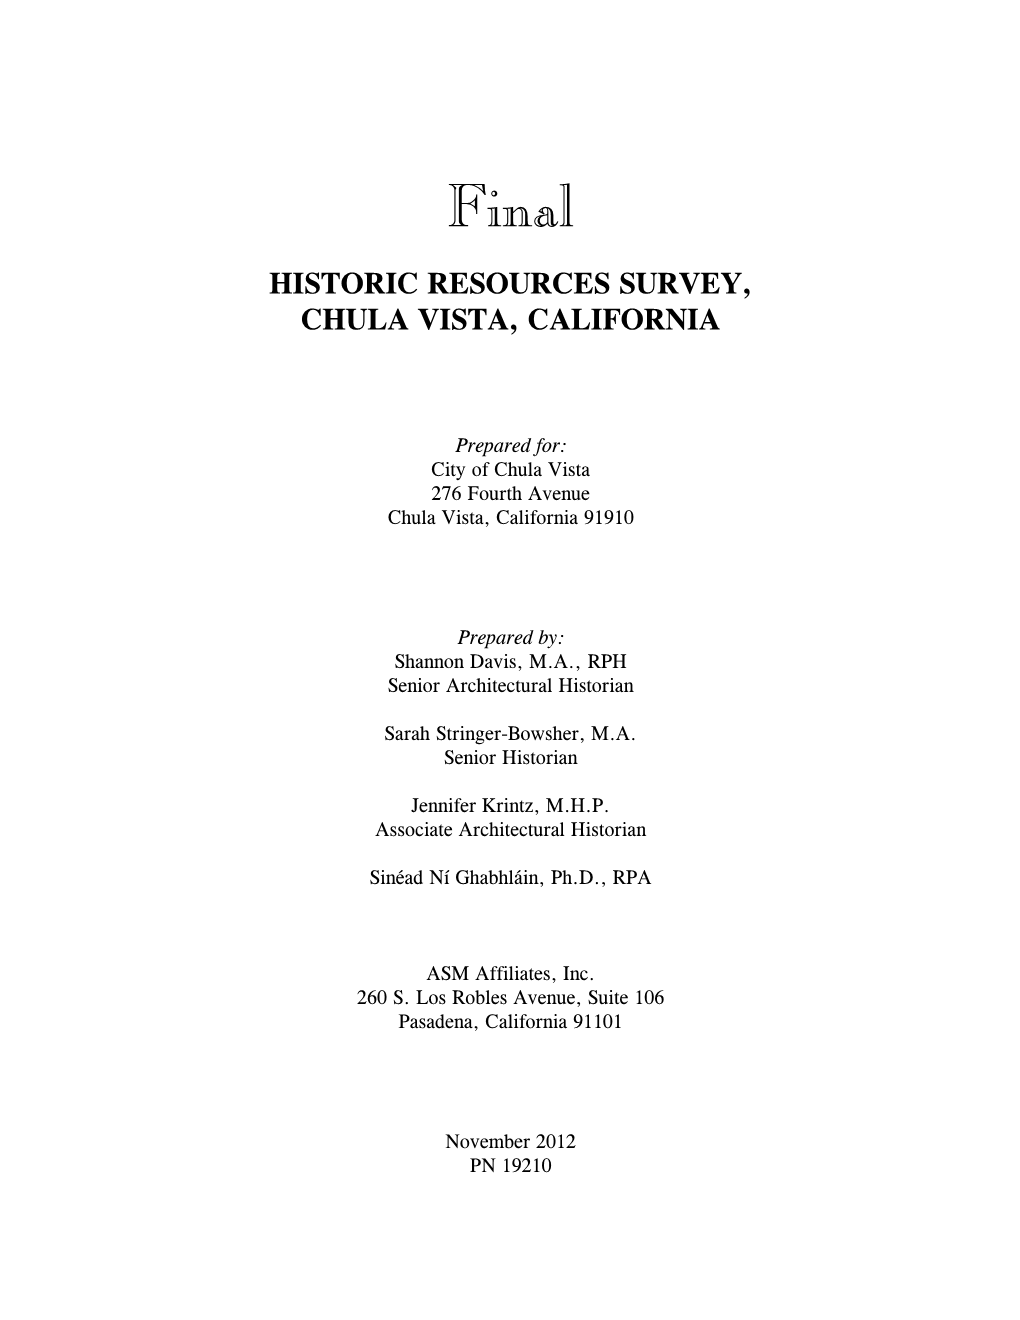 Historic Resources Survey, Chula Vista, California